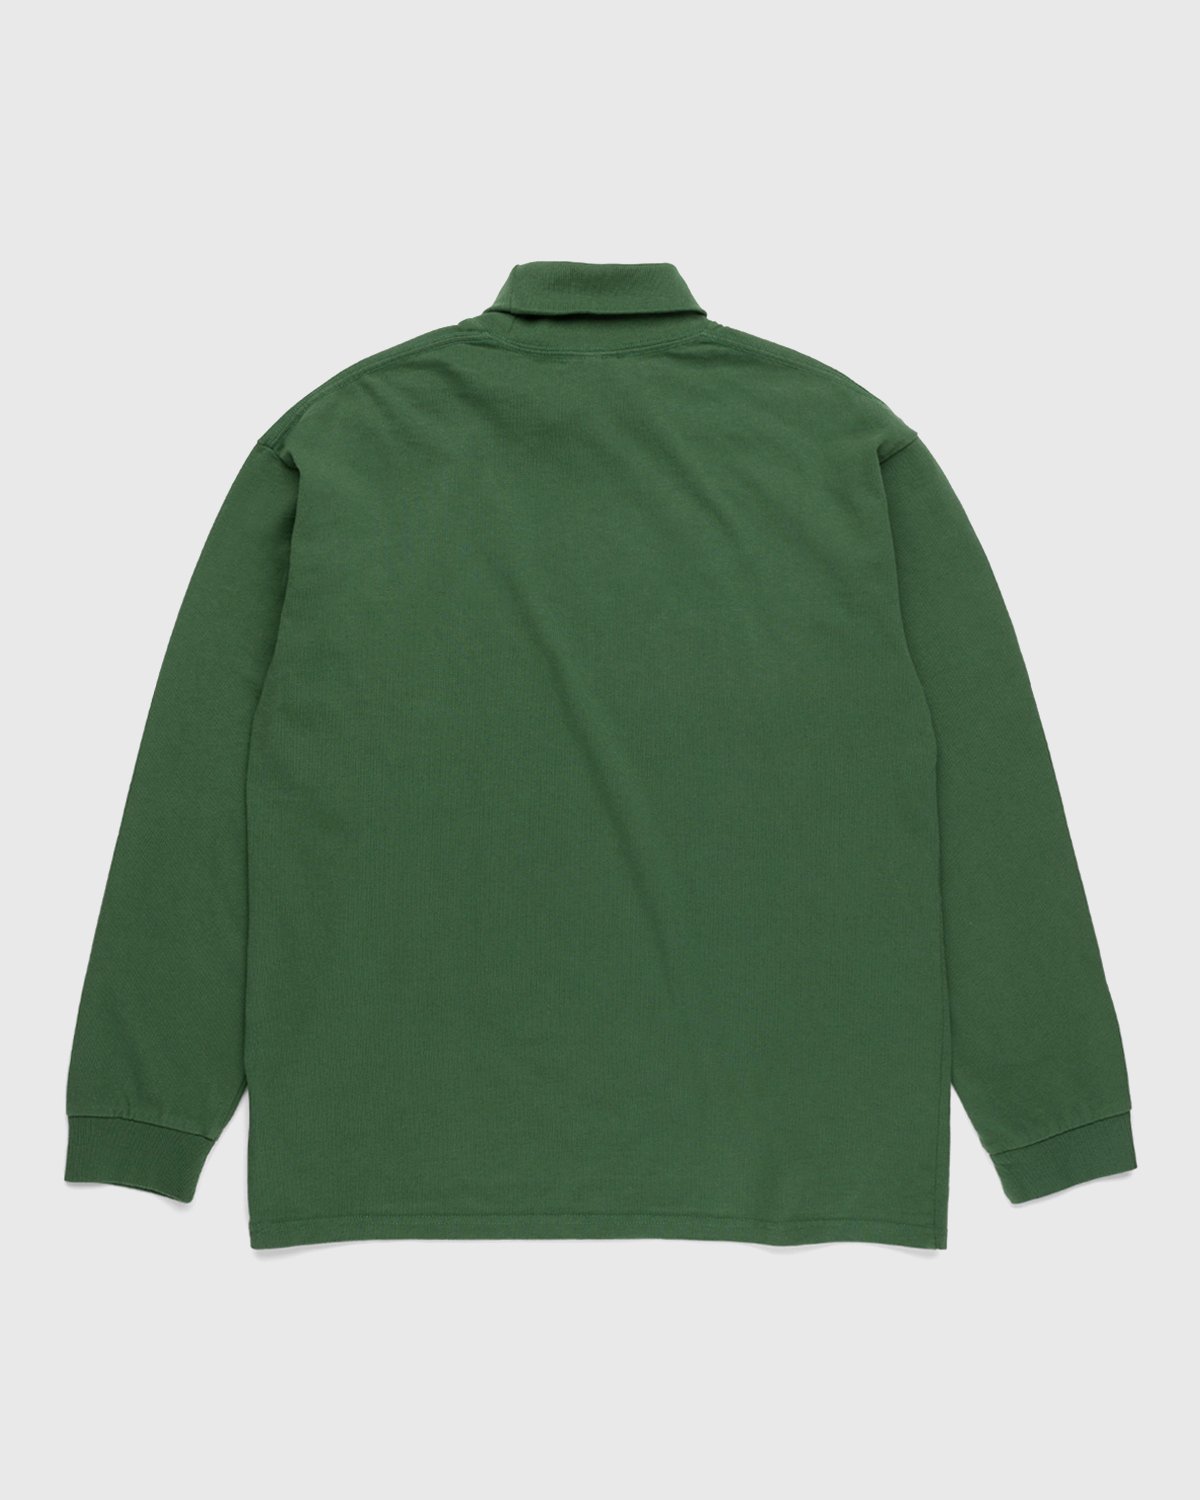 Highsnobiety - Heavy Staples Turtleneck Green - Clothing - Green - Image 2